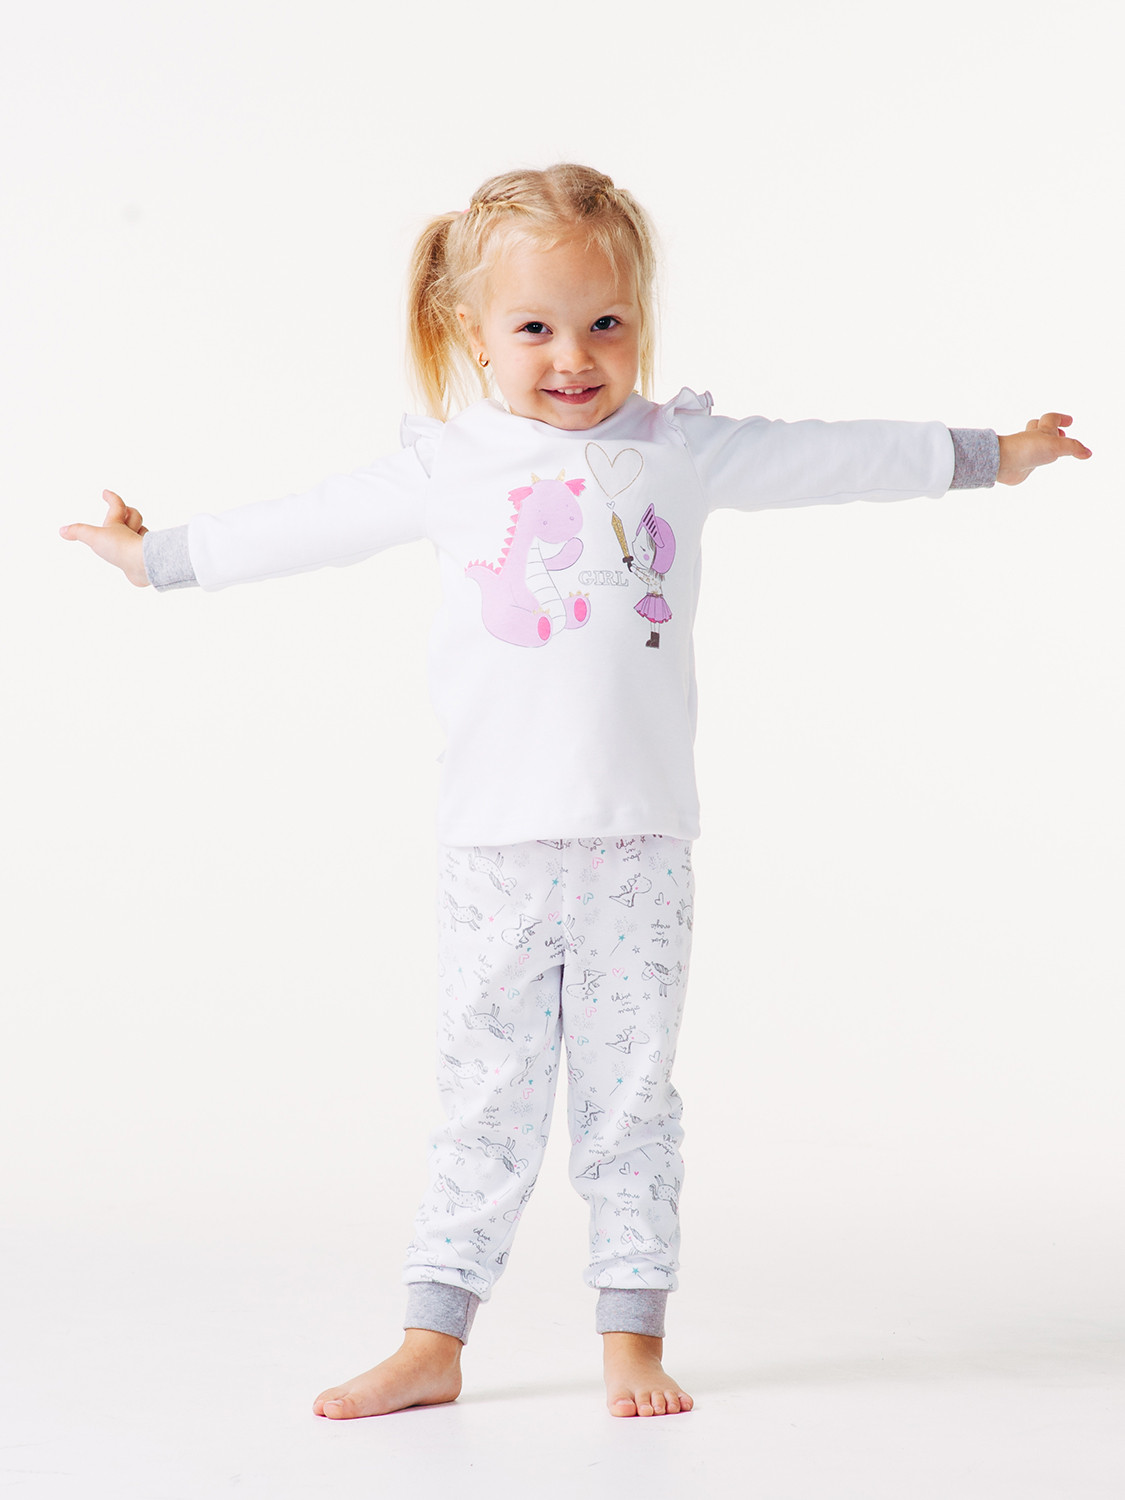 Пижама с кнопкой для девочки, арт.104247, возраст от 12 до 18 месяцев